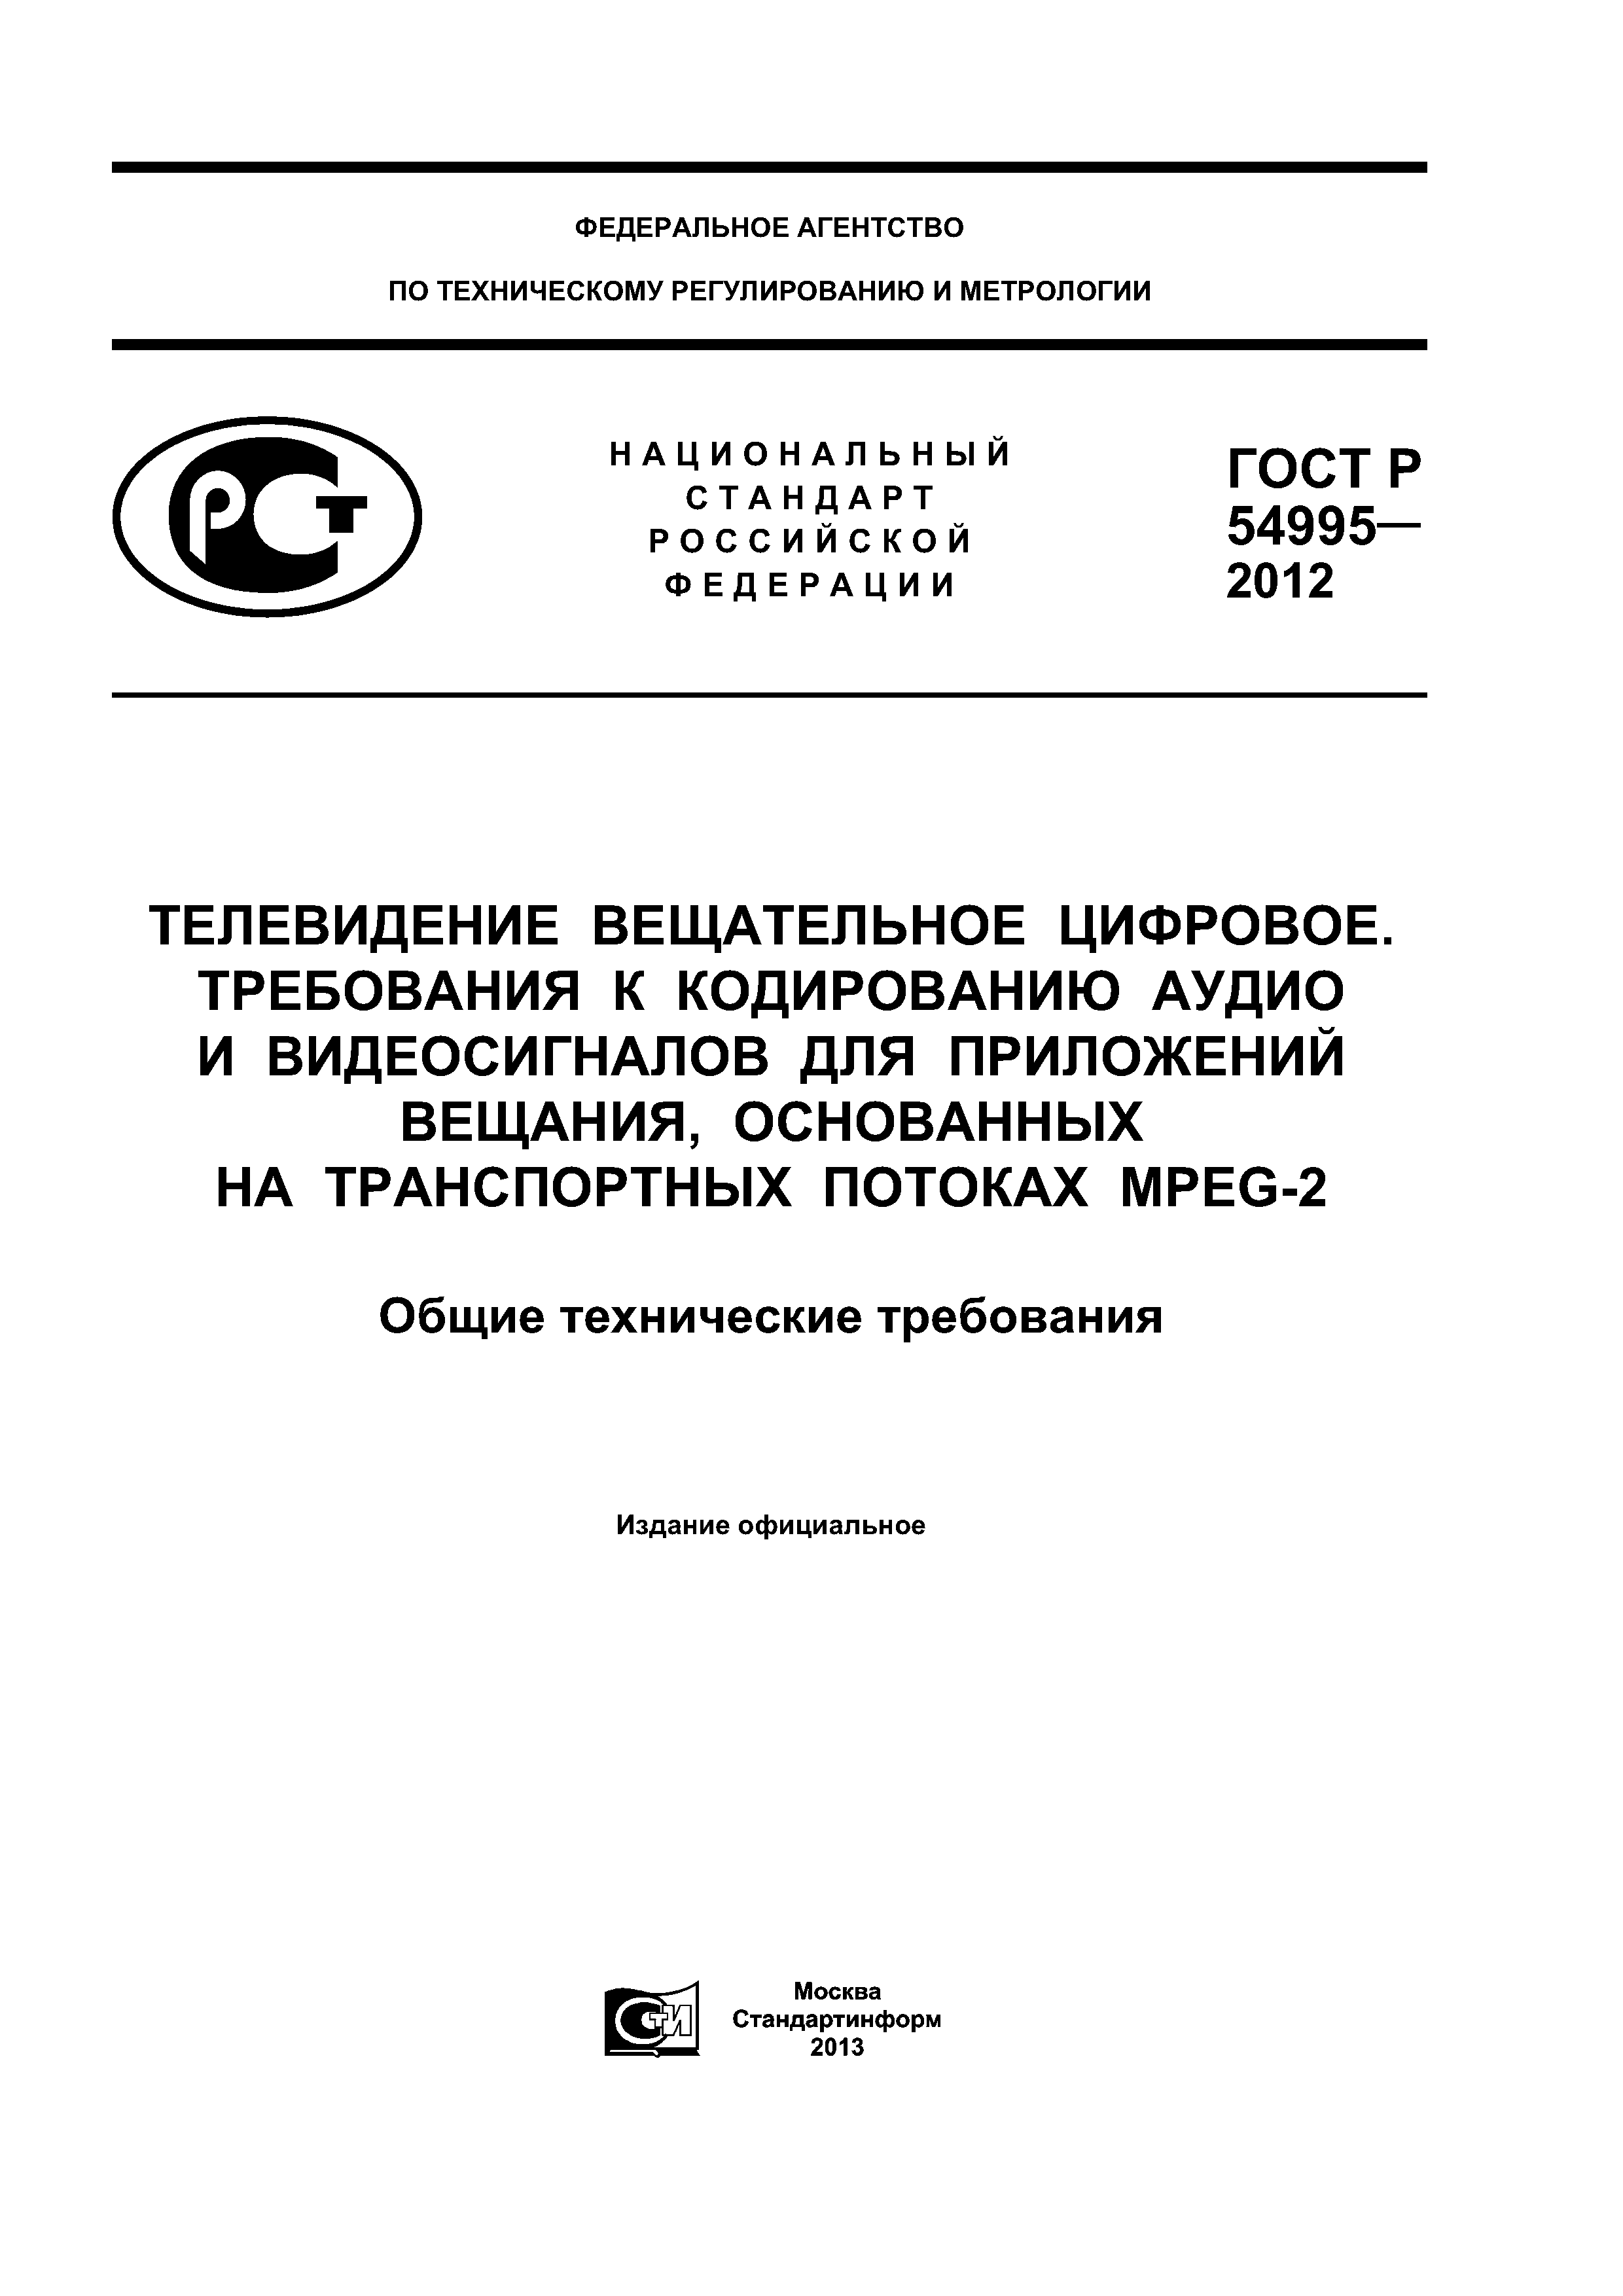 ГОСТ Р 54995-2012